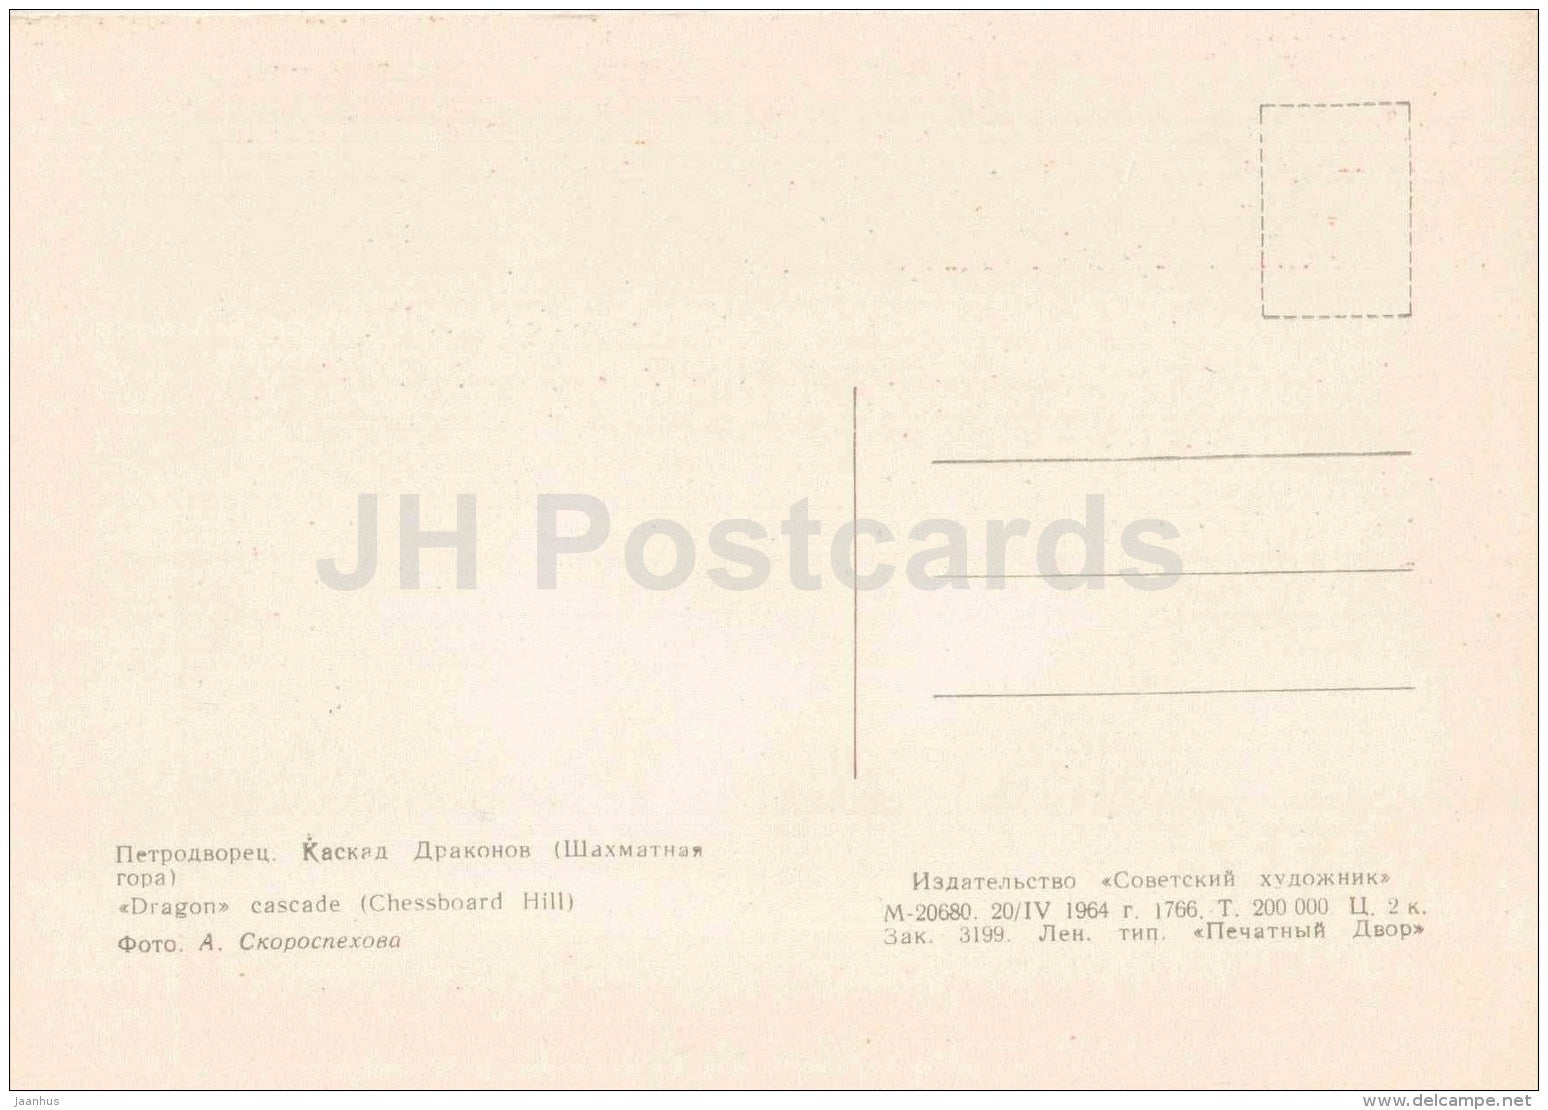 Dragon cascade - Chessboard Hill - Petrodvorets - 1964 - Russia USSR - unused - JH Postcards